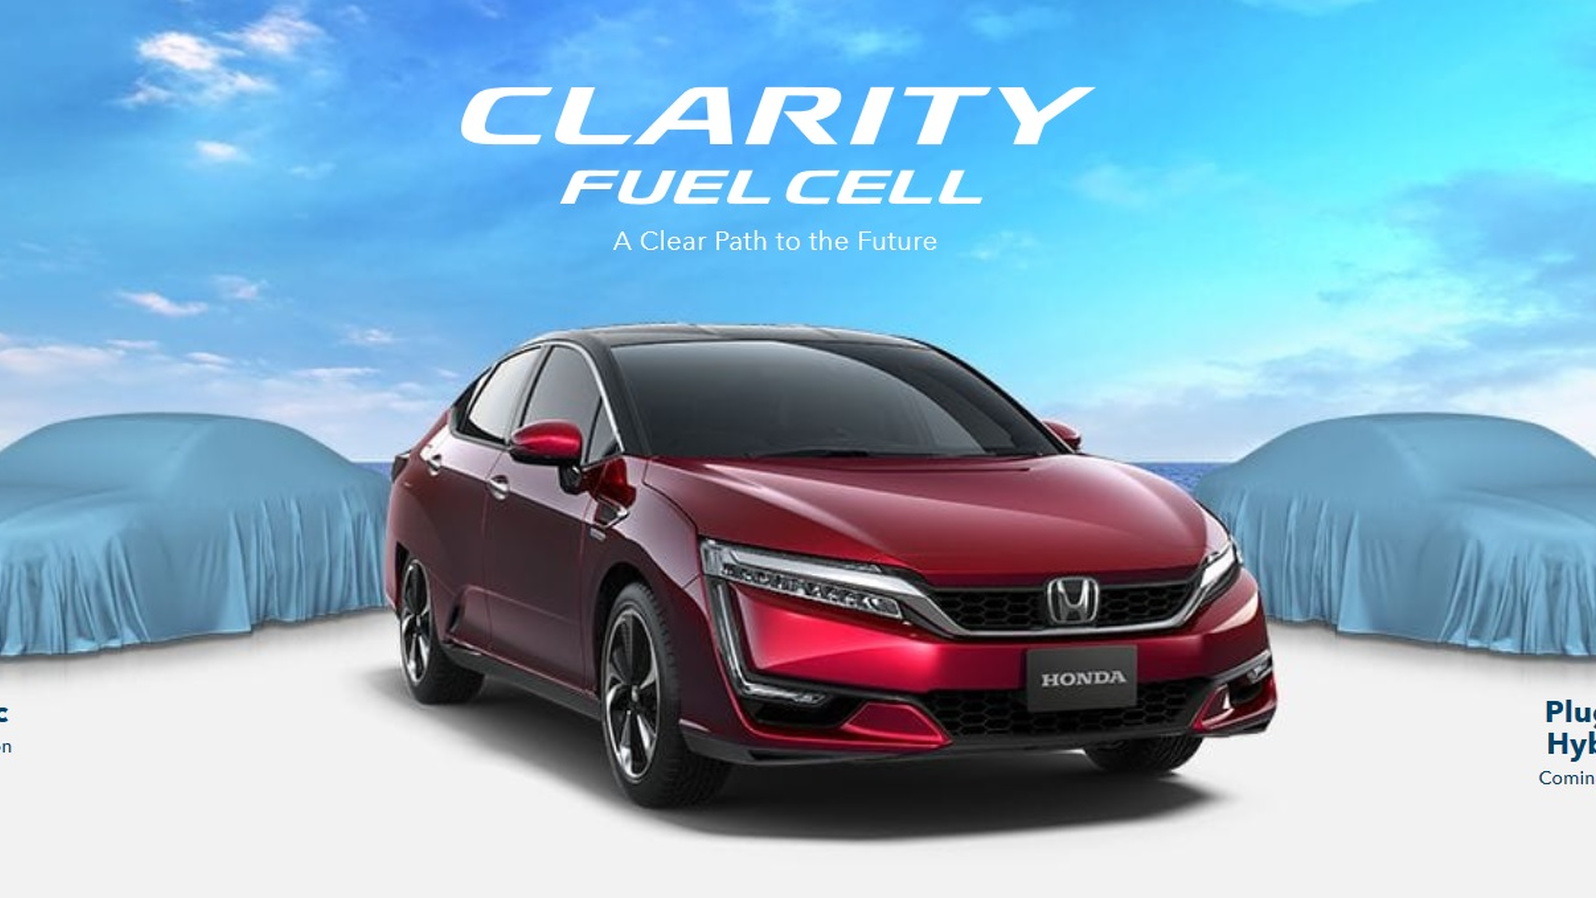 Honda Clarity teaser image, April 2016